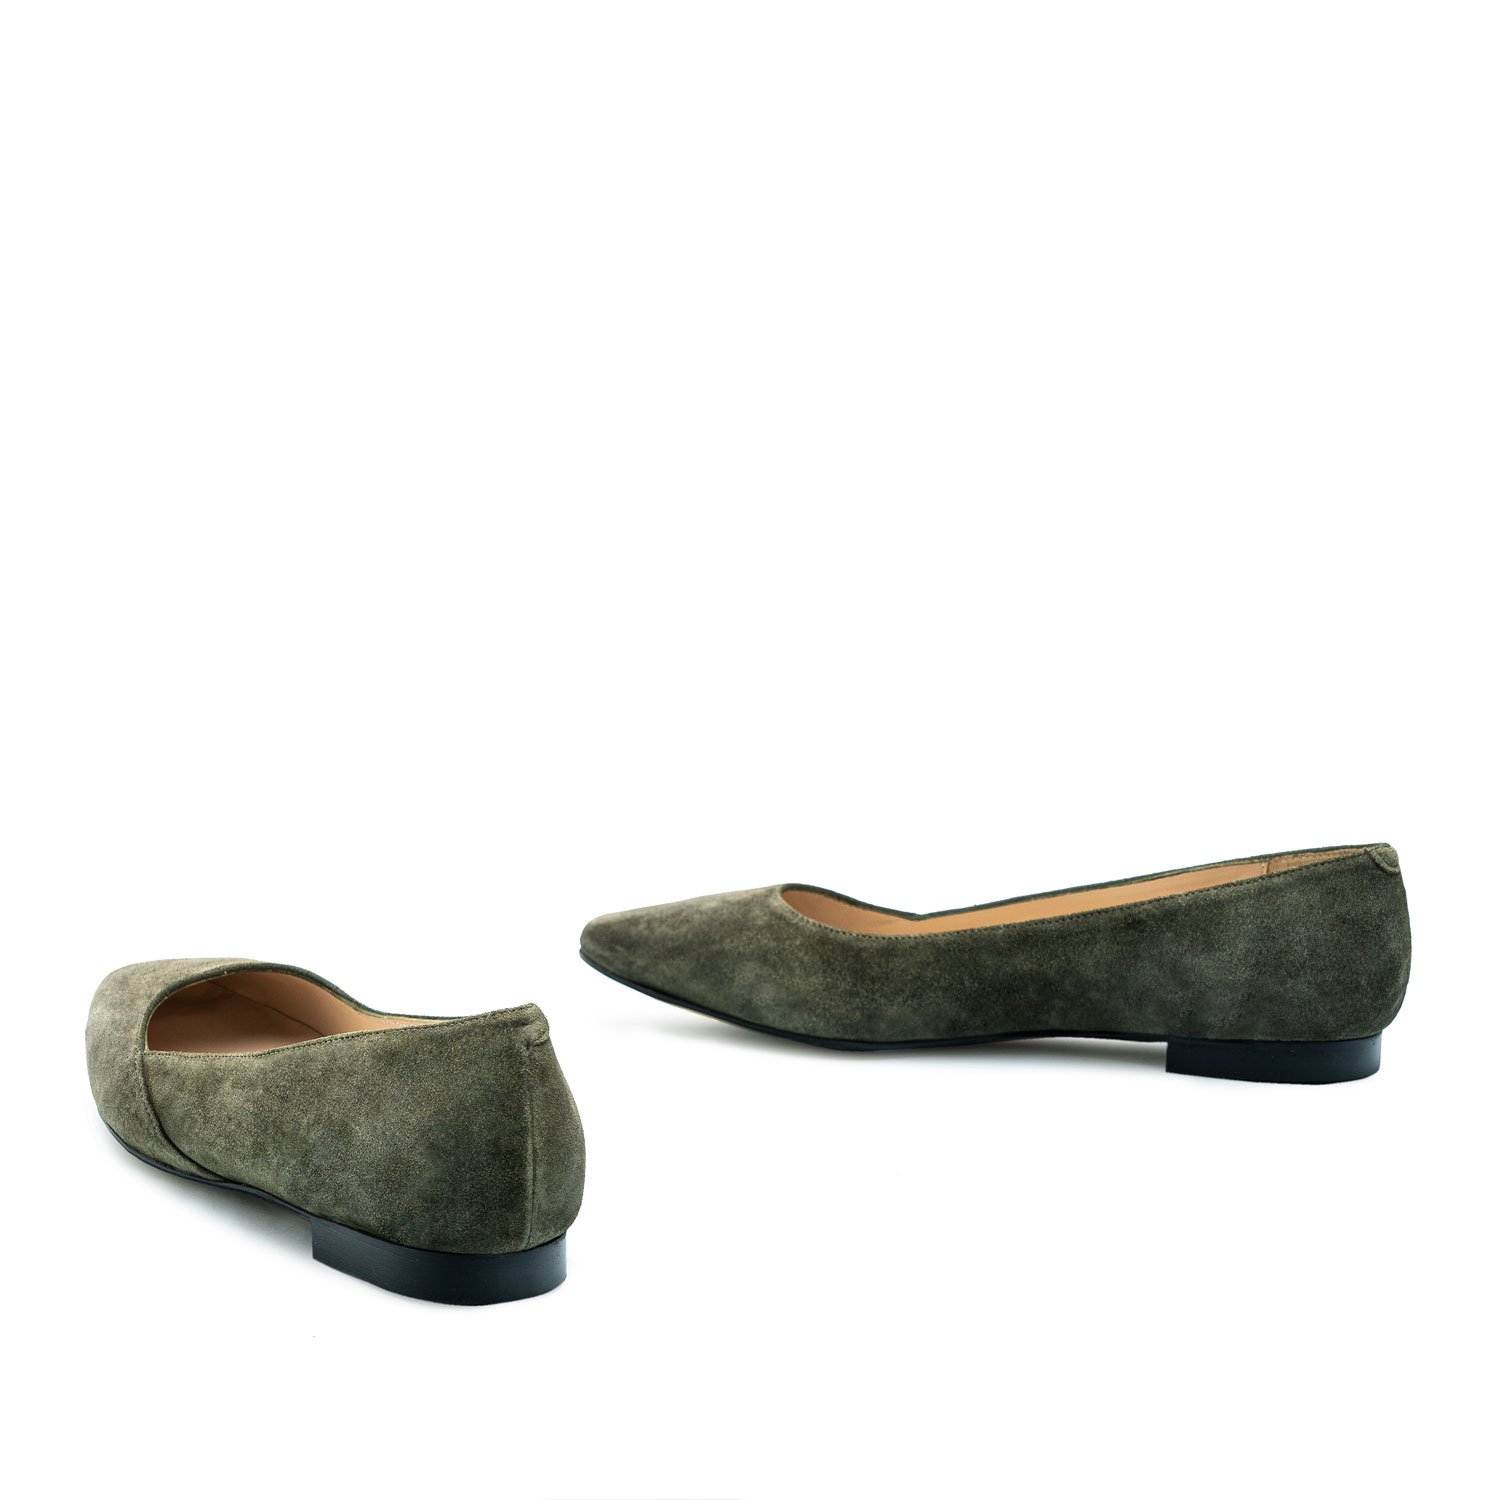 Chaussures plates en croûte de cuir Kaki 